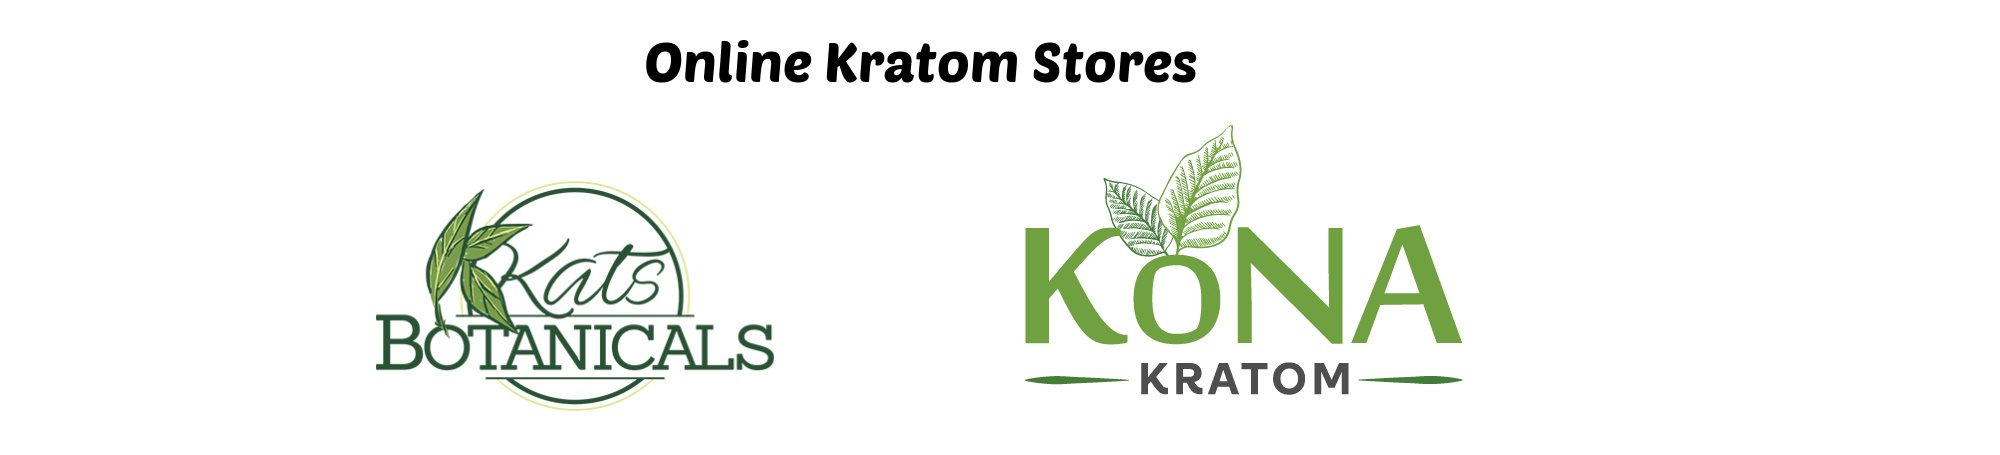 image of online kratom stores